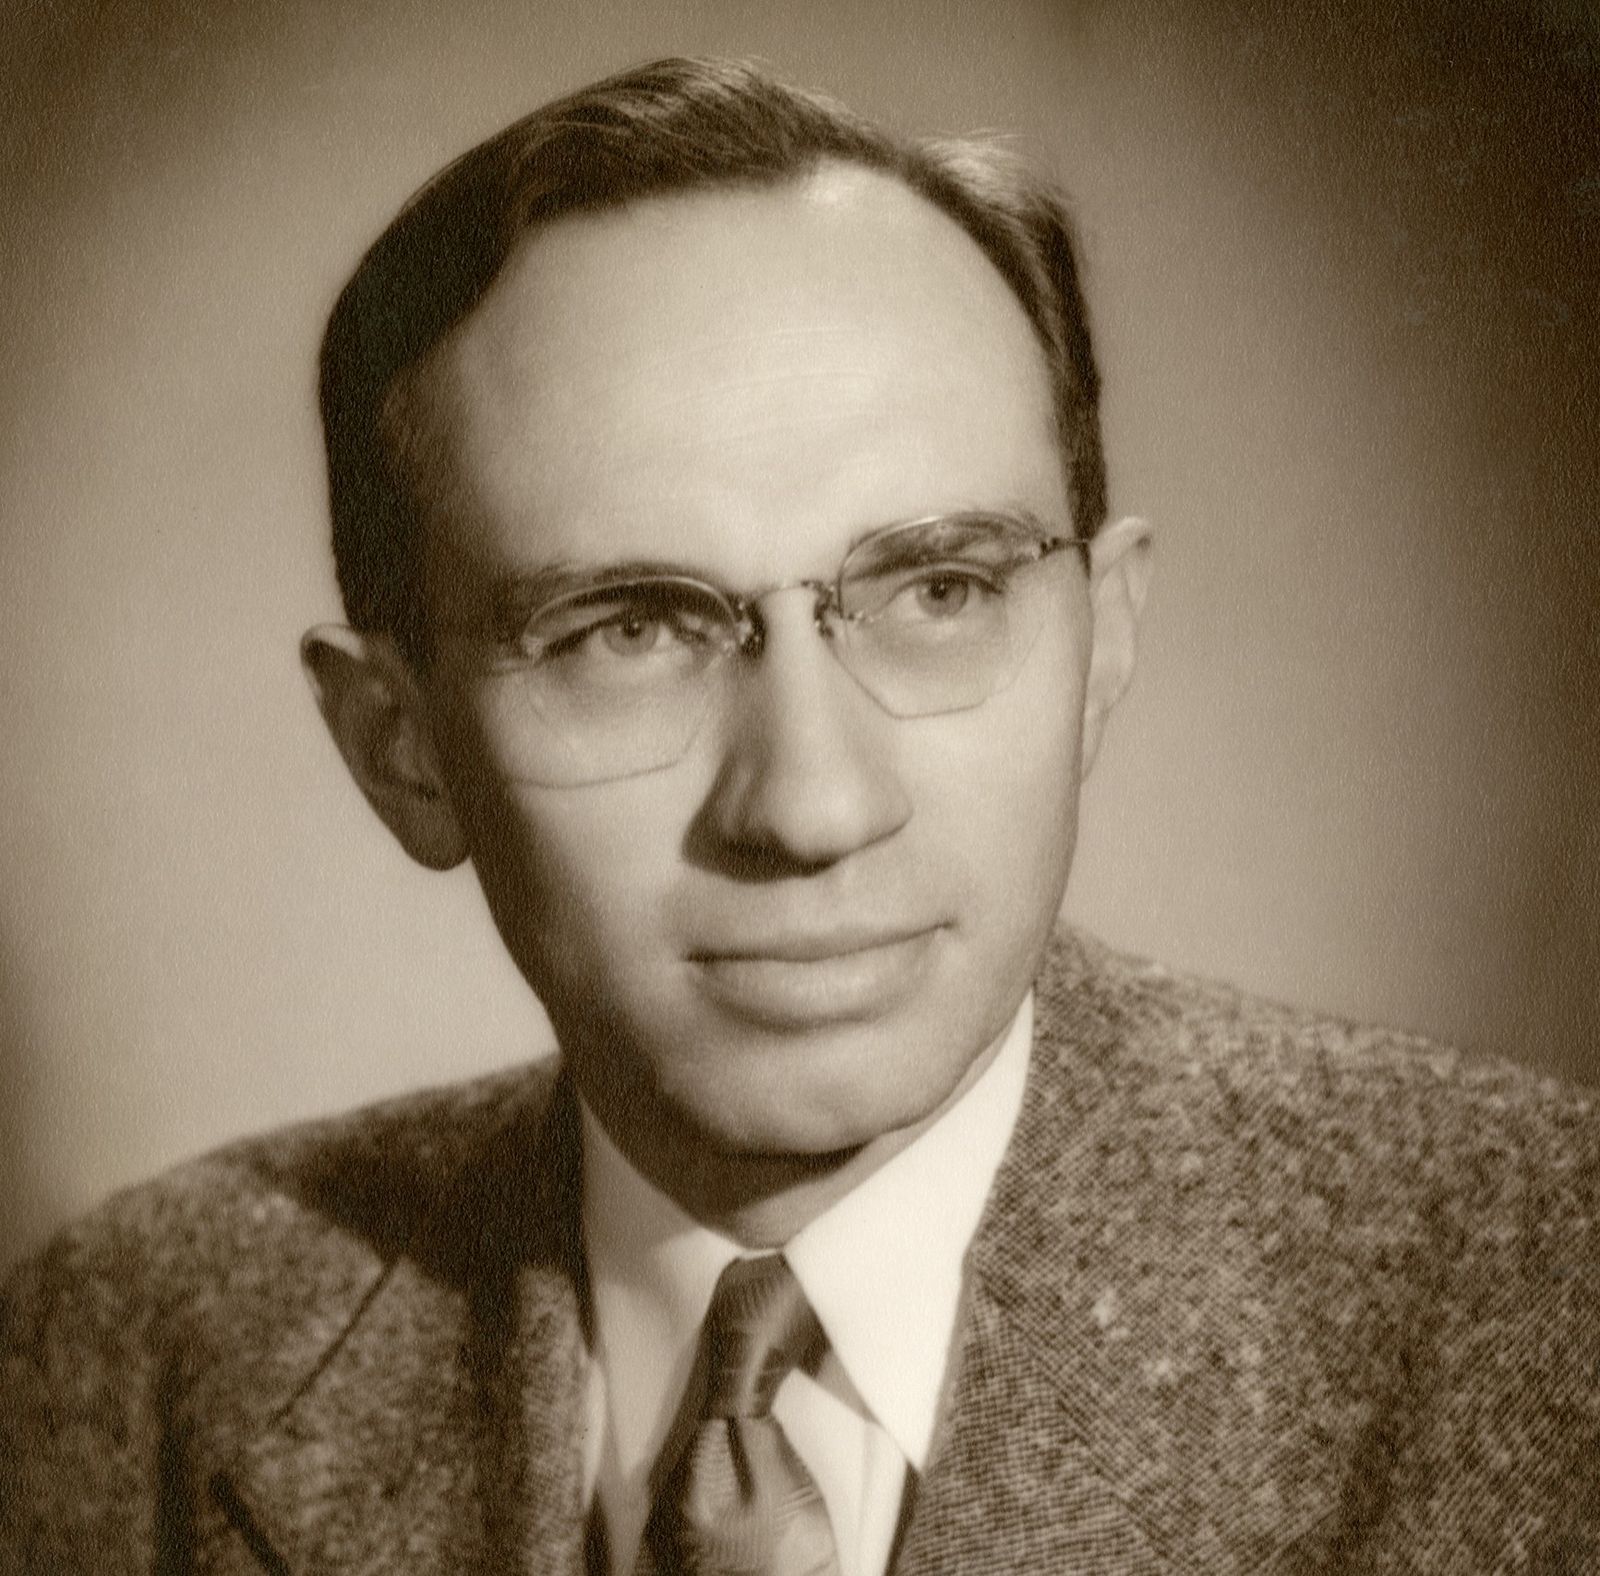 A portrait of Gordon B. Hinckley in 1951.